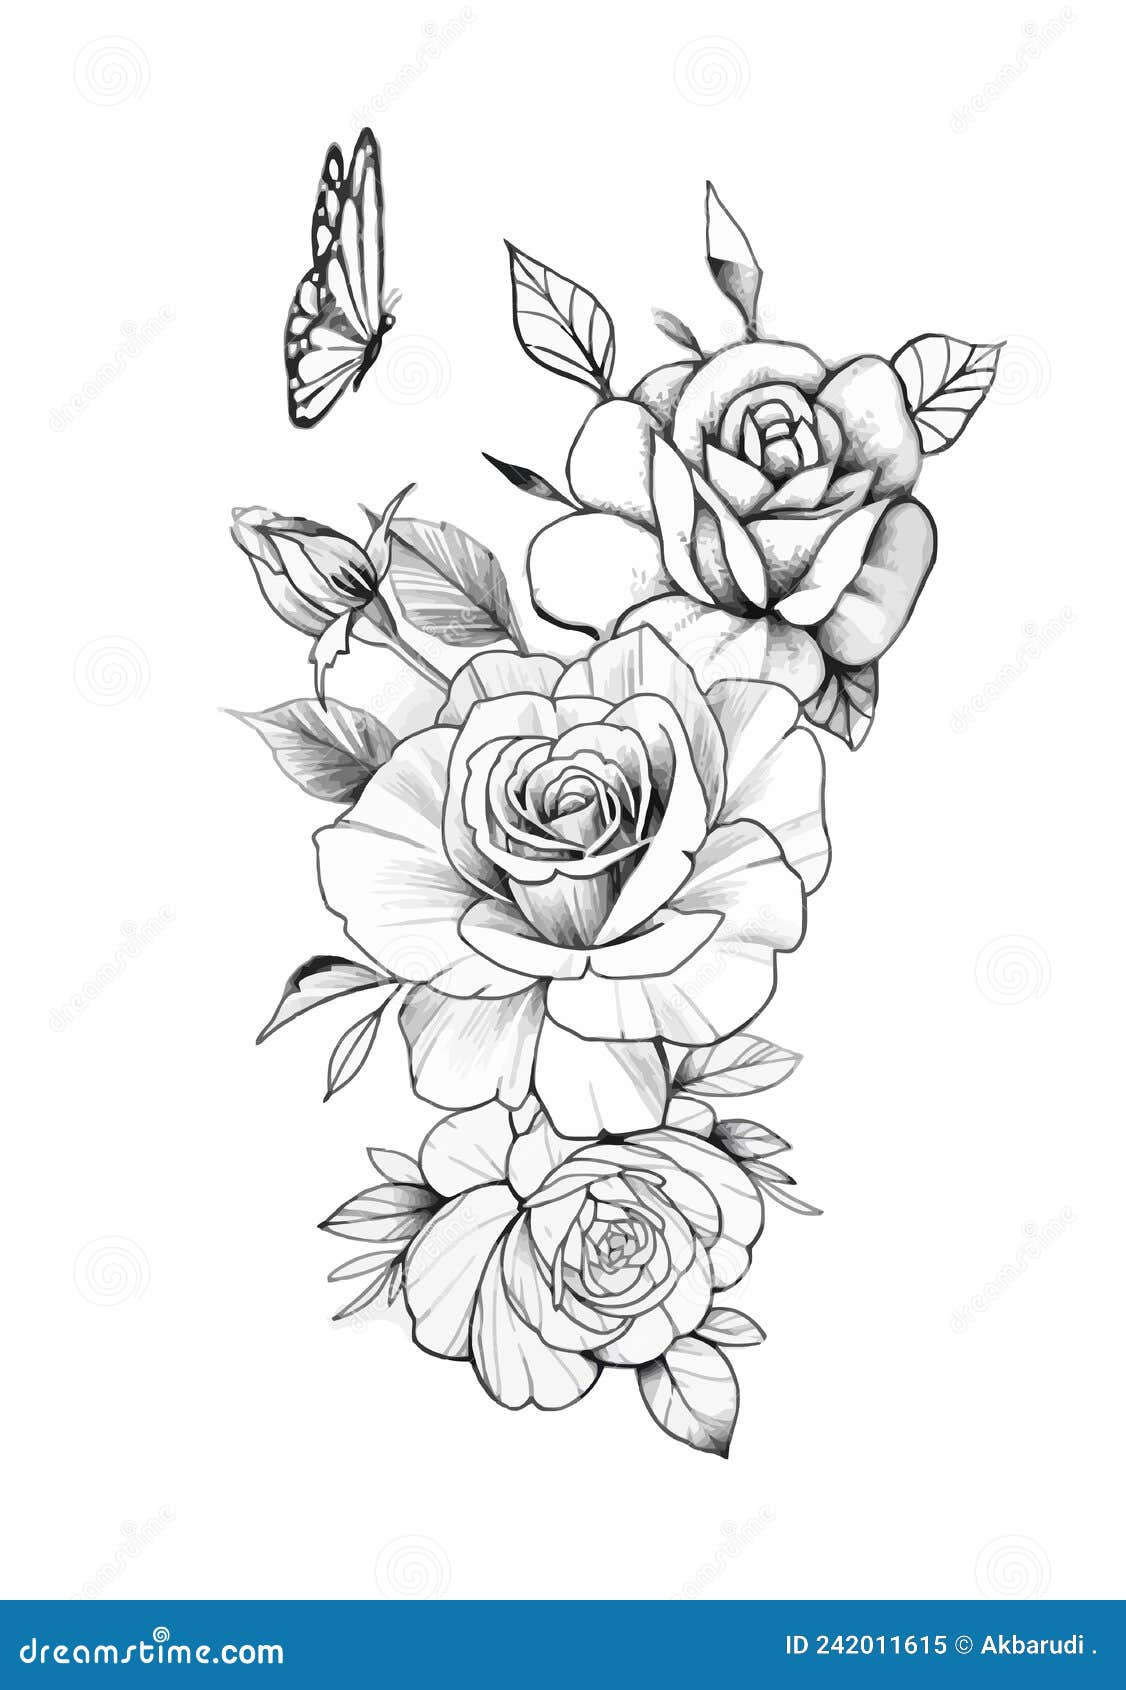 Rose-flower-drawing by royalbullet1000 on DeviantArt